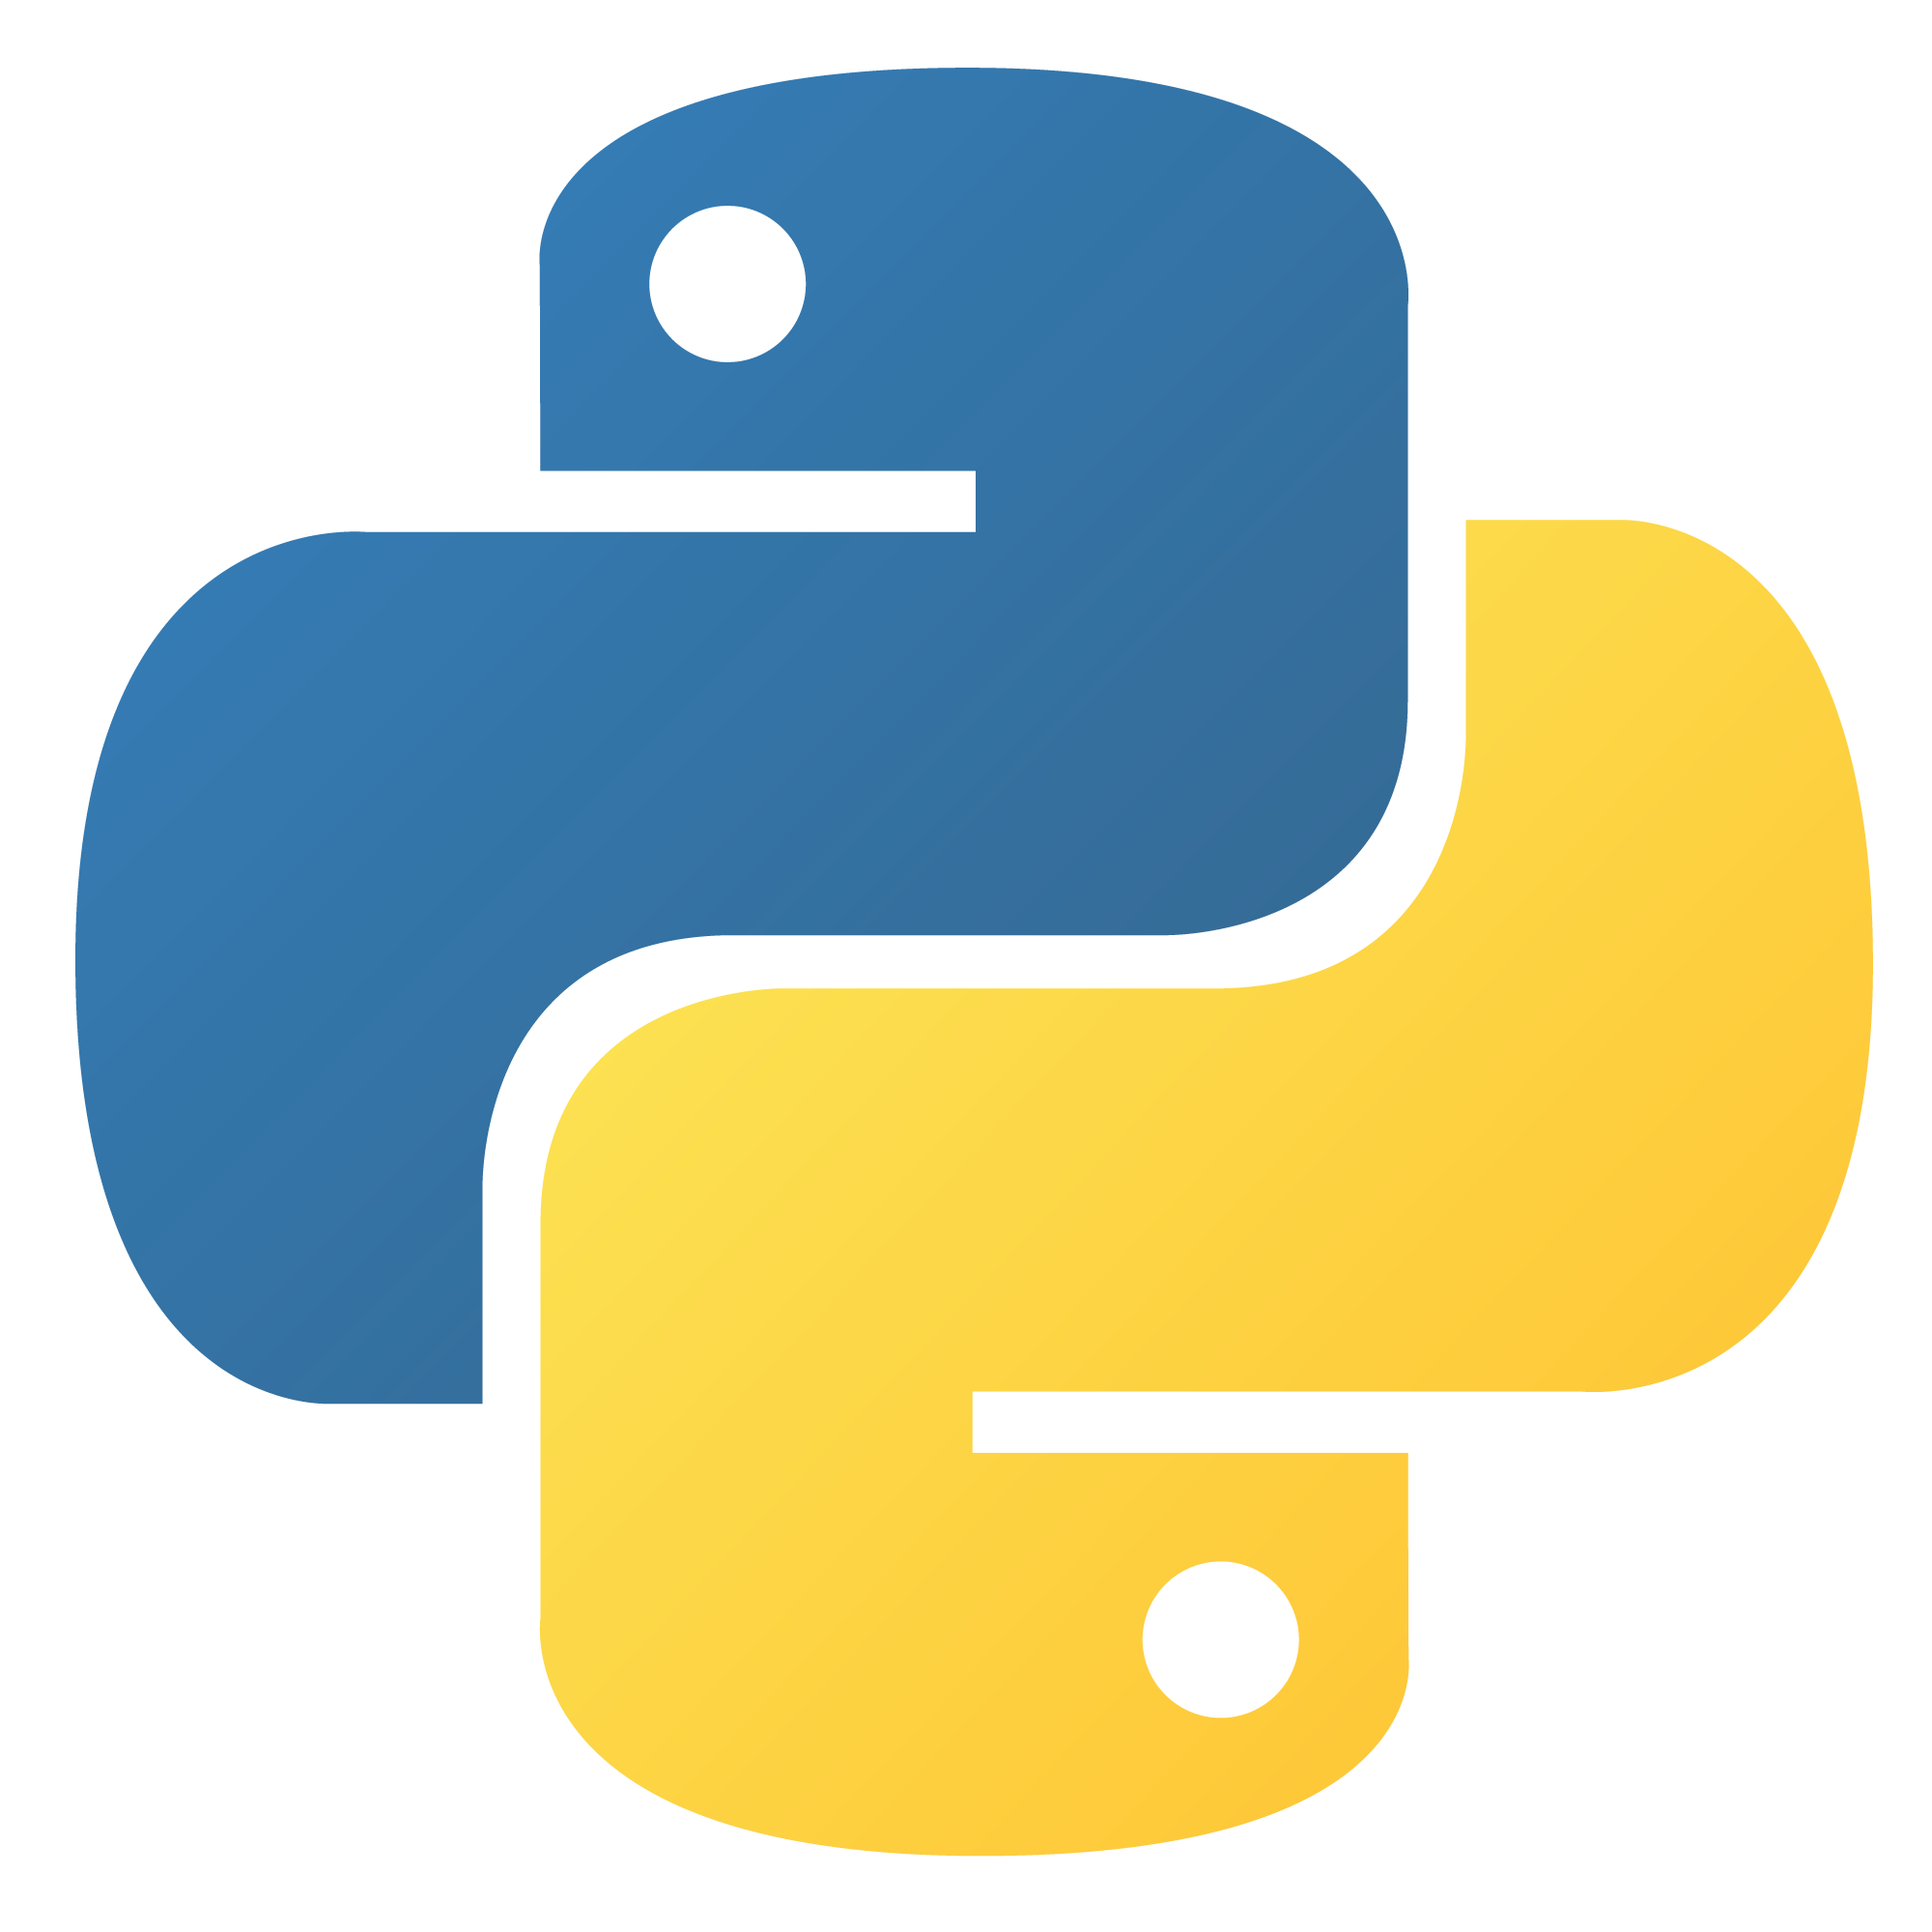 logo python